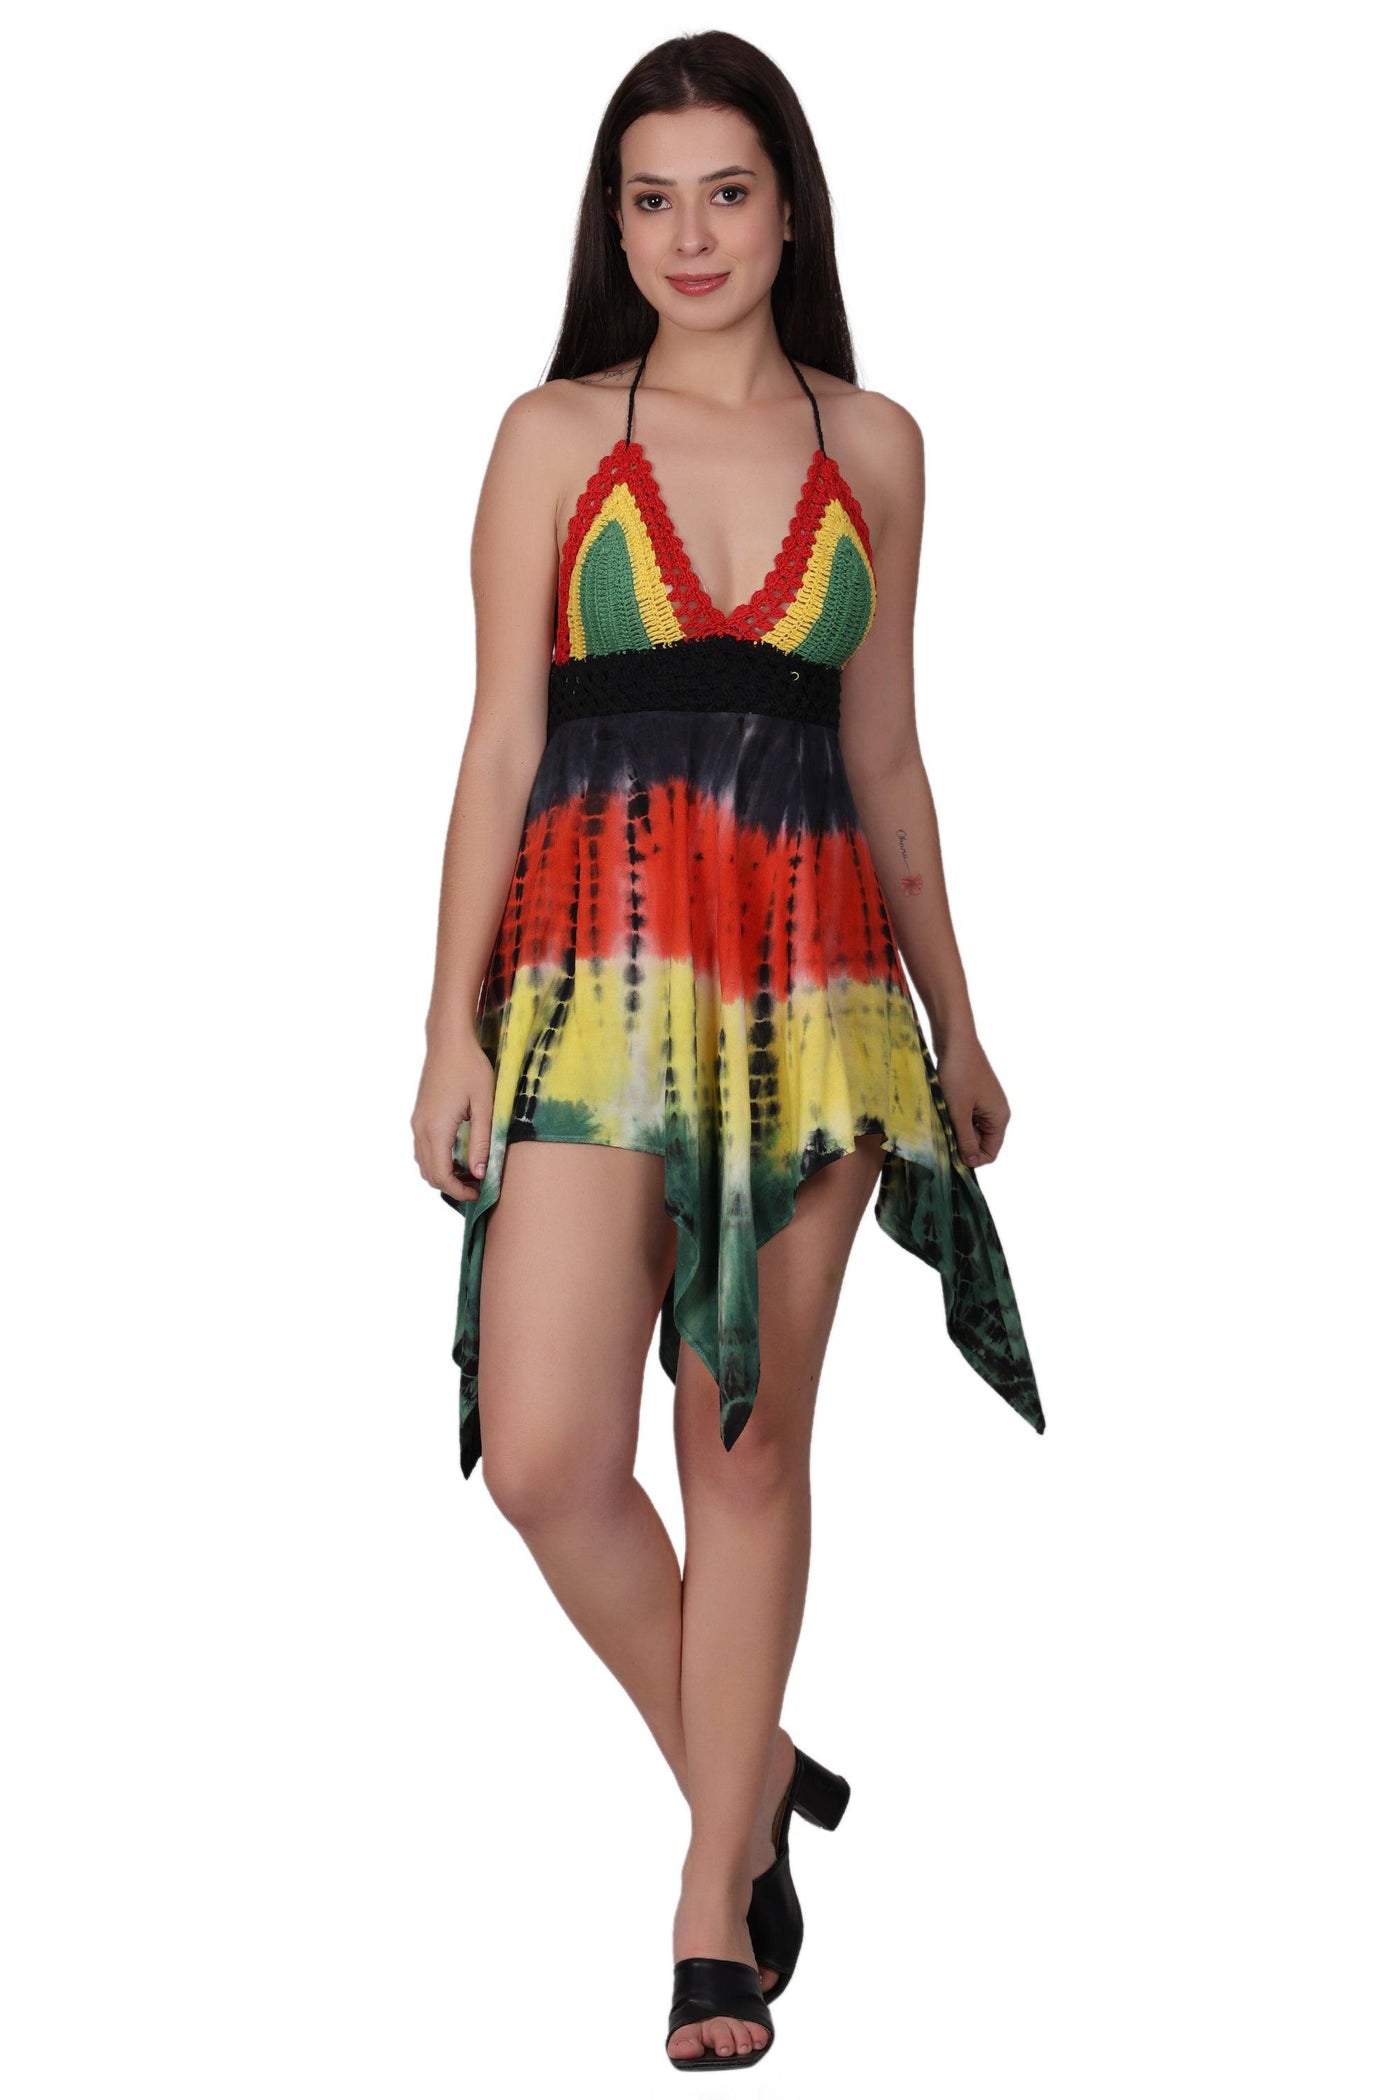 Crochet Rasta/Jamaican Tie Dye Dress 412137  - Advance Apparels Inc